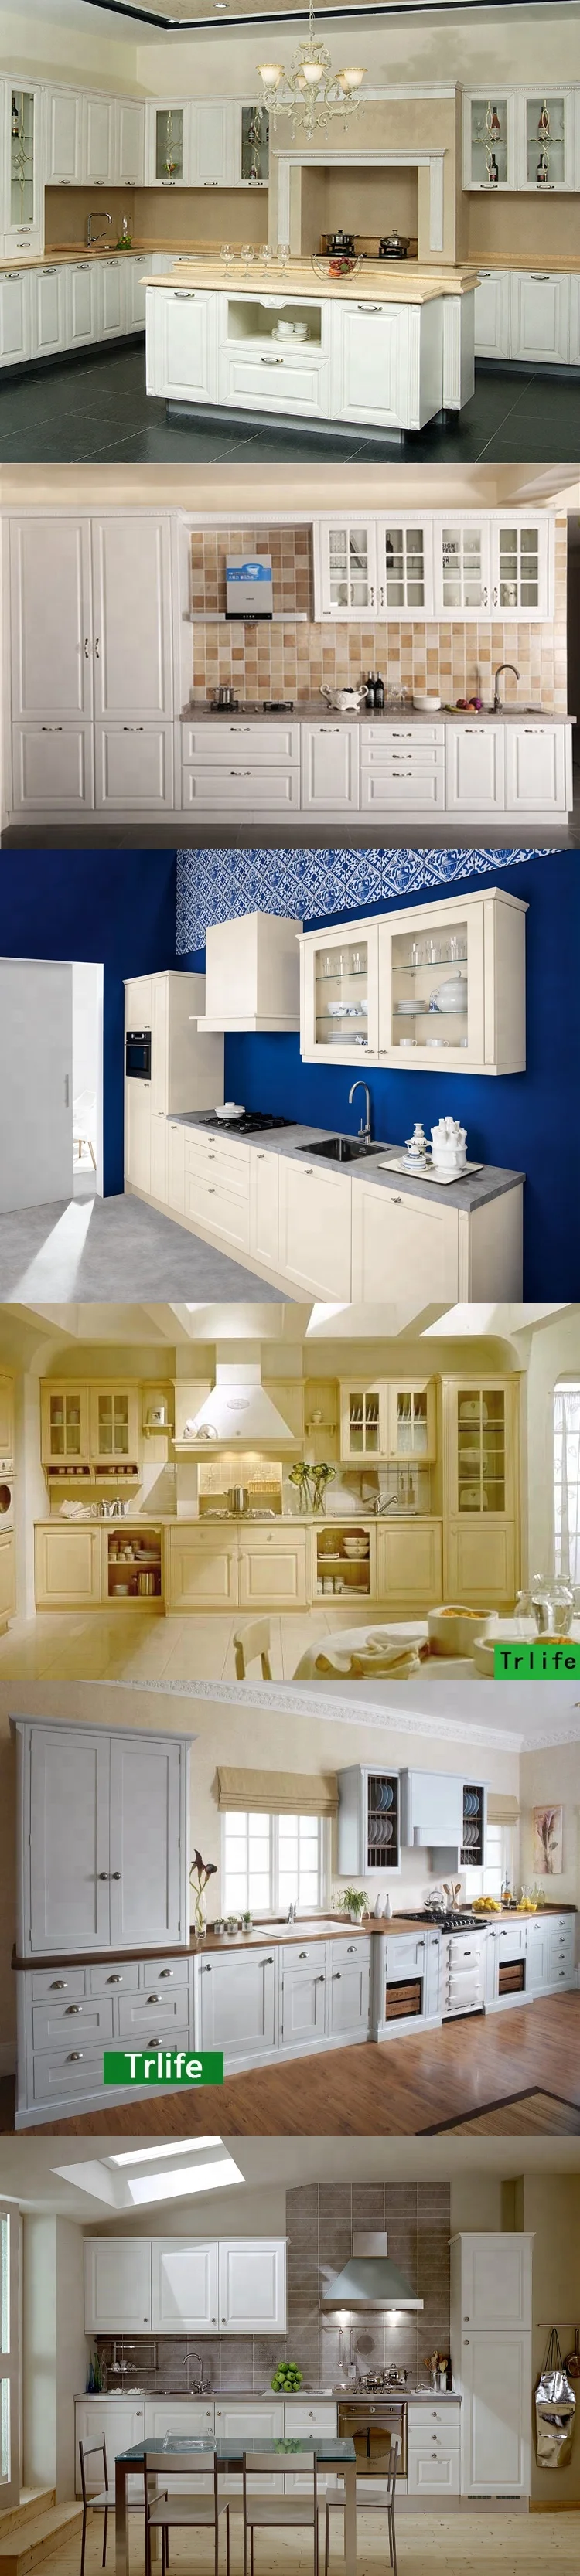 Trlife Kitchen pantry cupboards waterproof kitchen cabinets